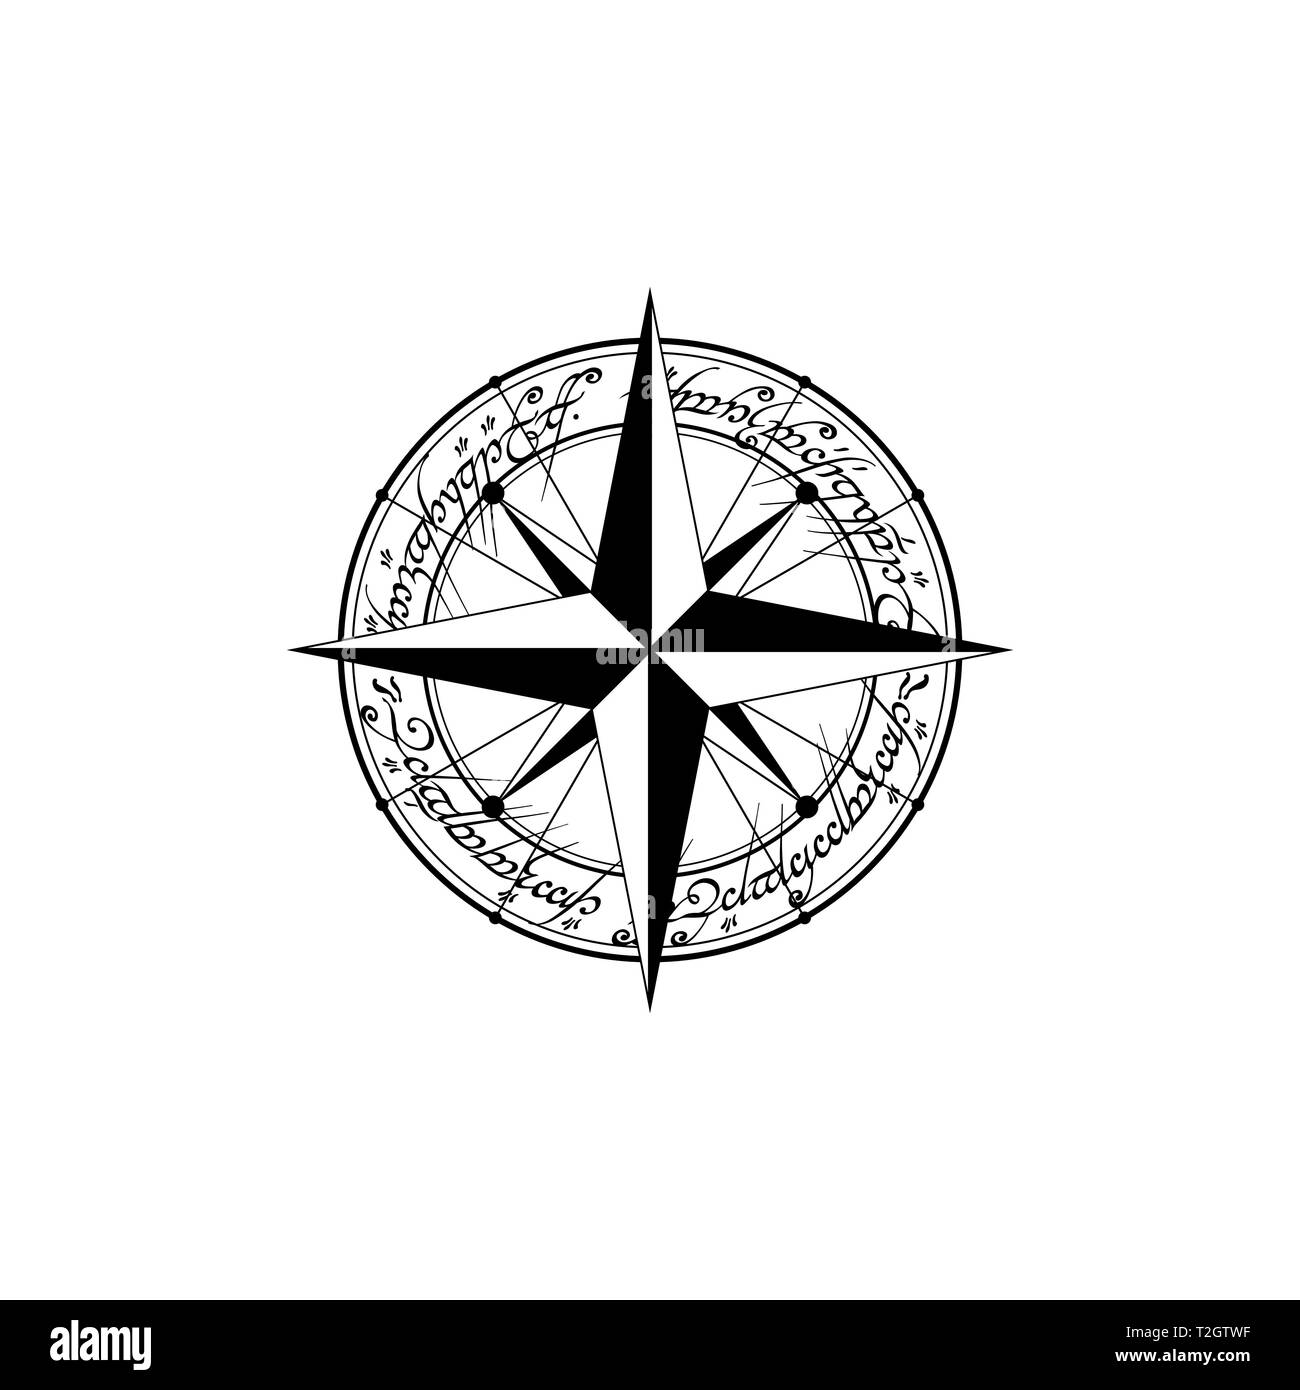 Black compass rose isolated on Banque d'images noir et blanc - Alamy